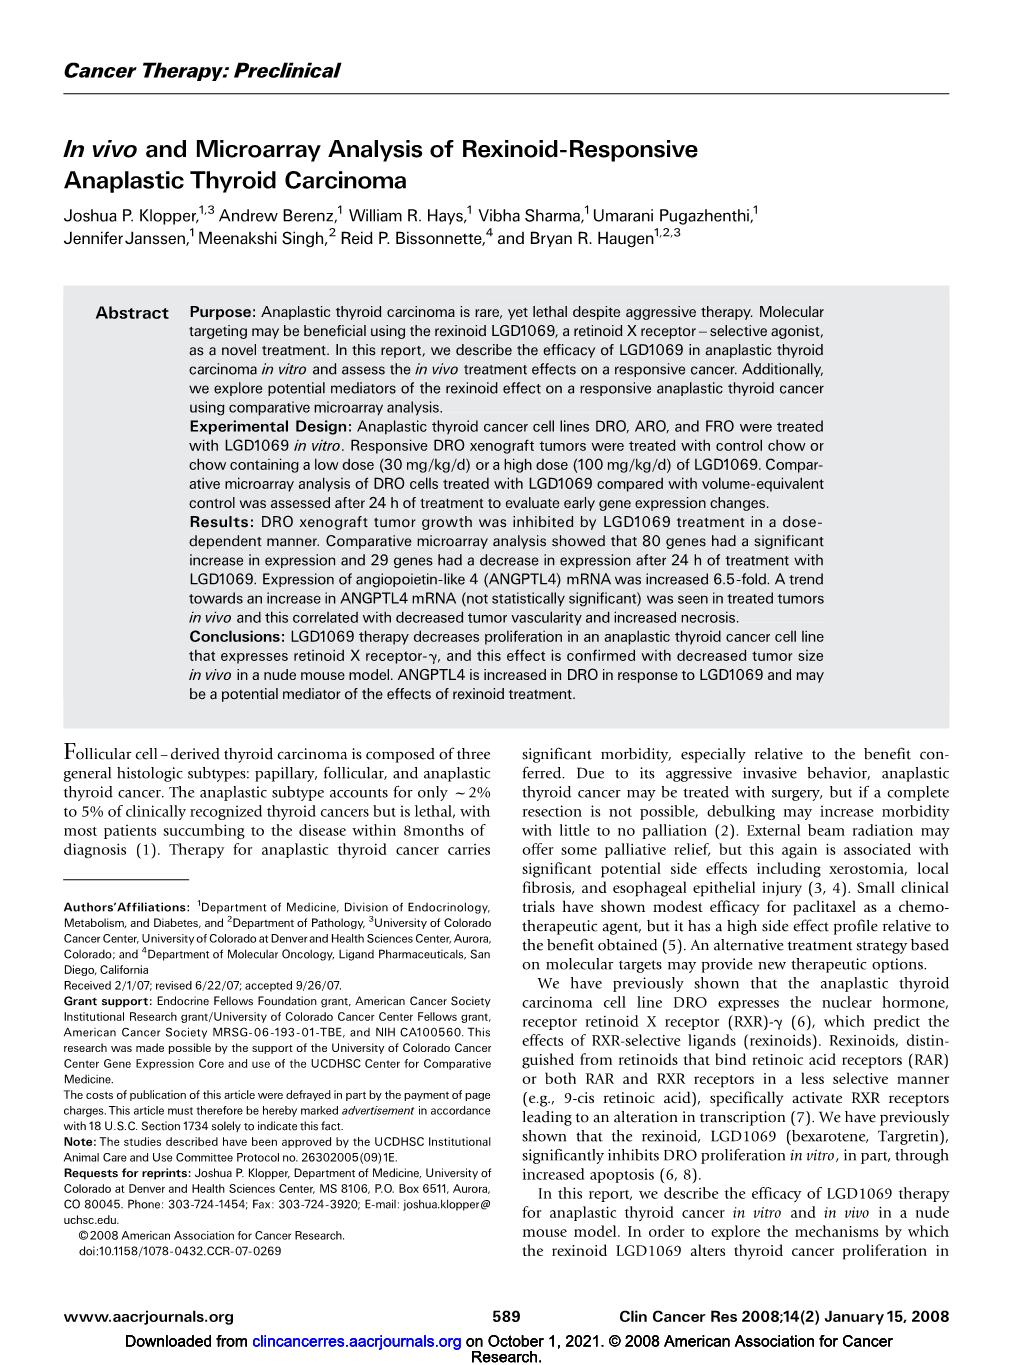 In Vivo and Microarray Analysis of Rexinoid-Responsive Anaplastic Thyroid Carcinoma Joshua P